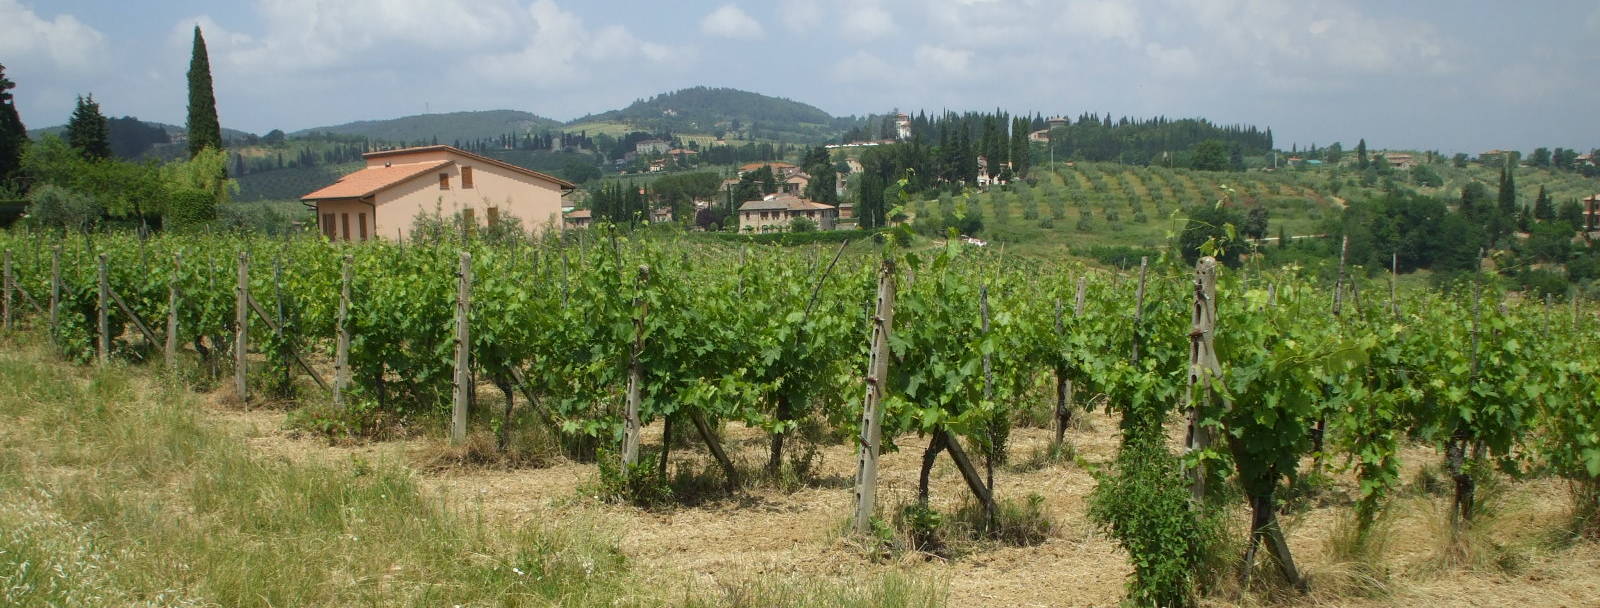 Vineyard near San Gimignano.